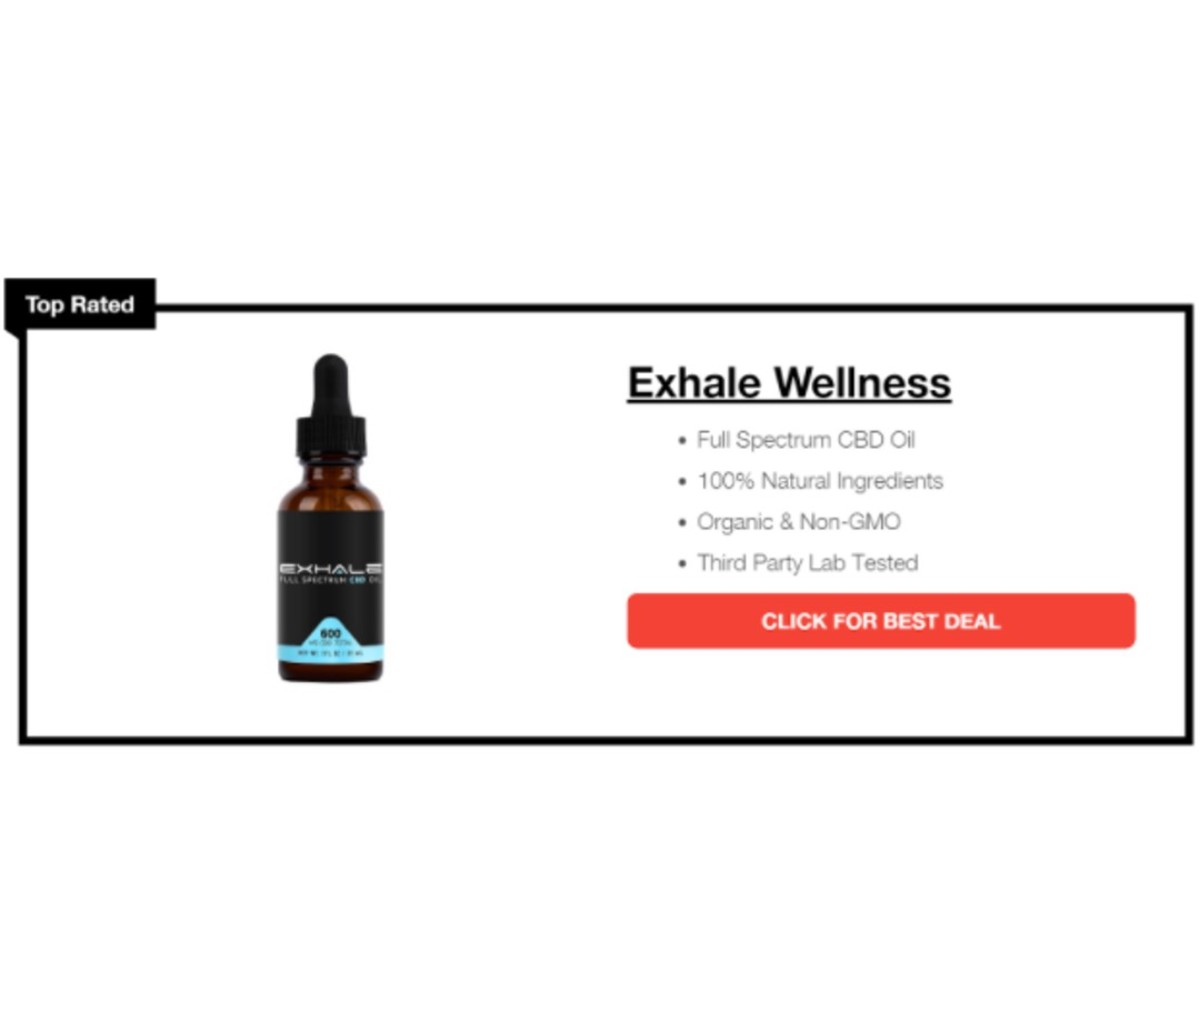 Exhale Wellness - Overall Best Full-Spectrum Hemp CBD Oil; Editor’s Choice